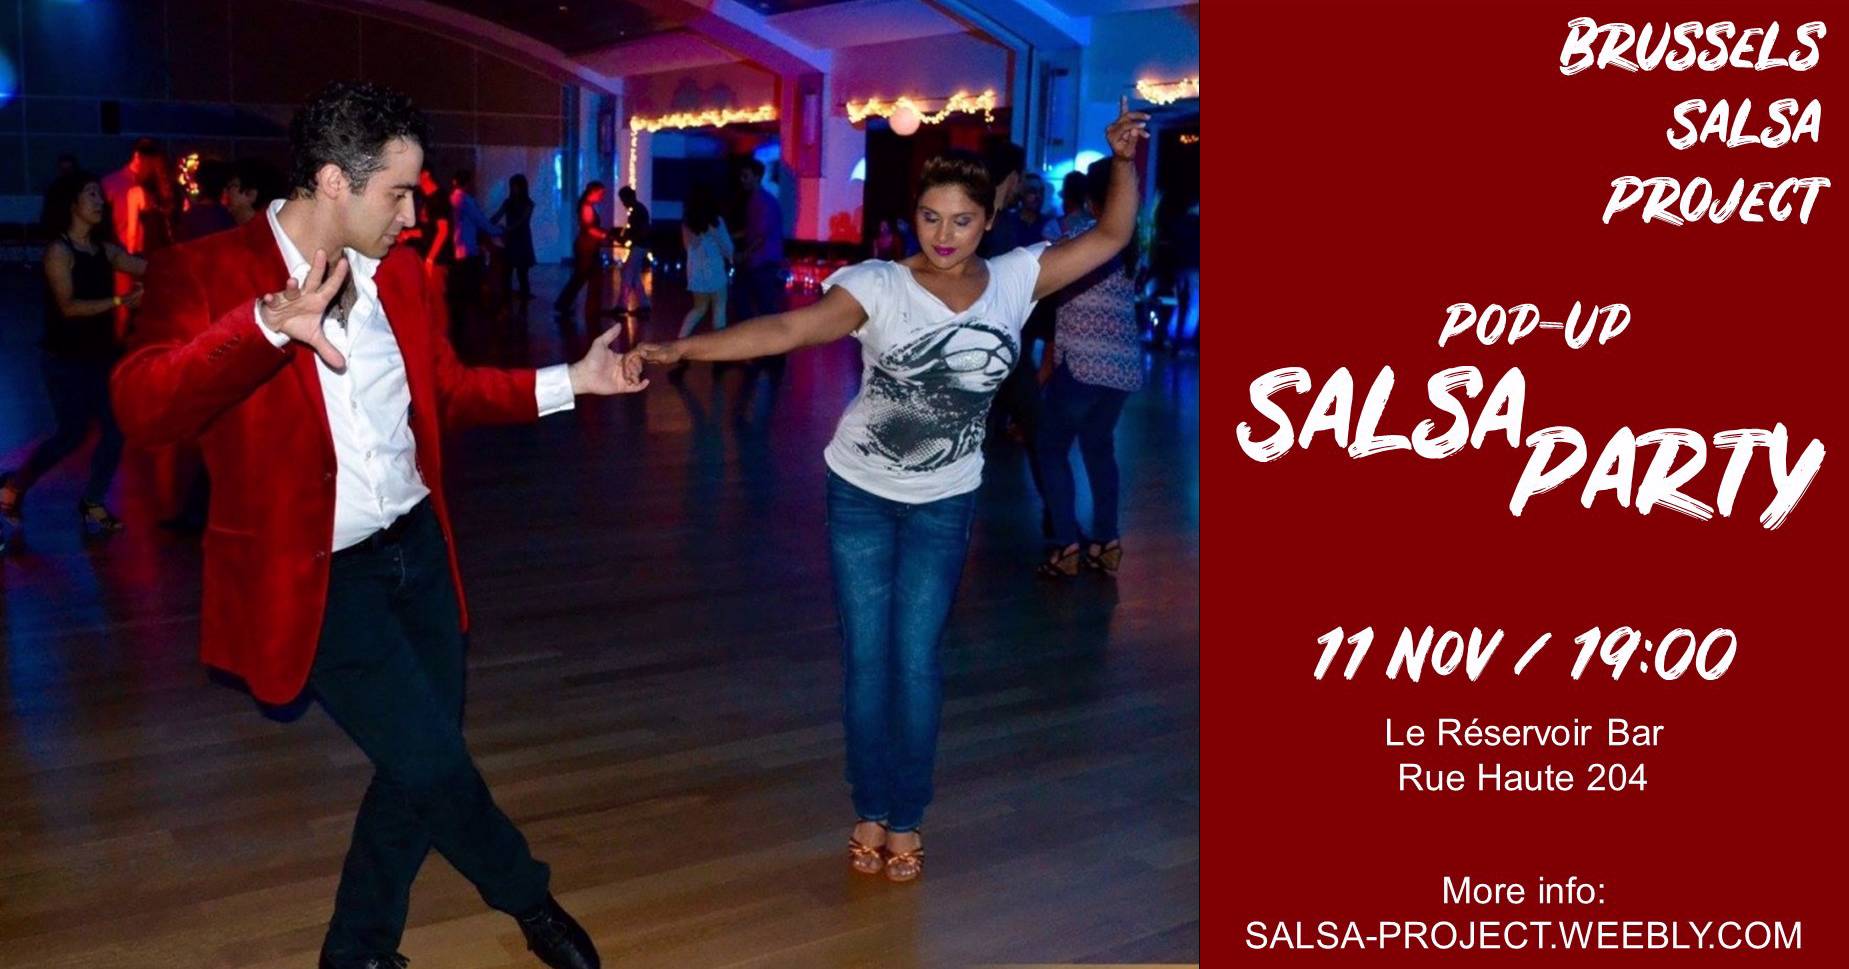 Cover Pop-up Salsa Party / Soirée Salsa Pop-up